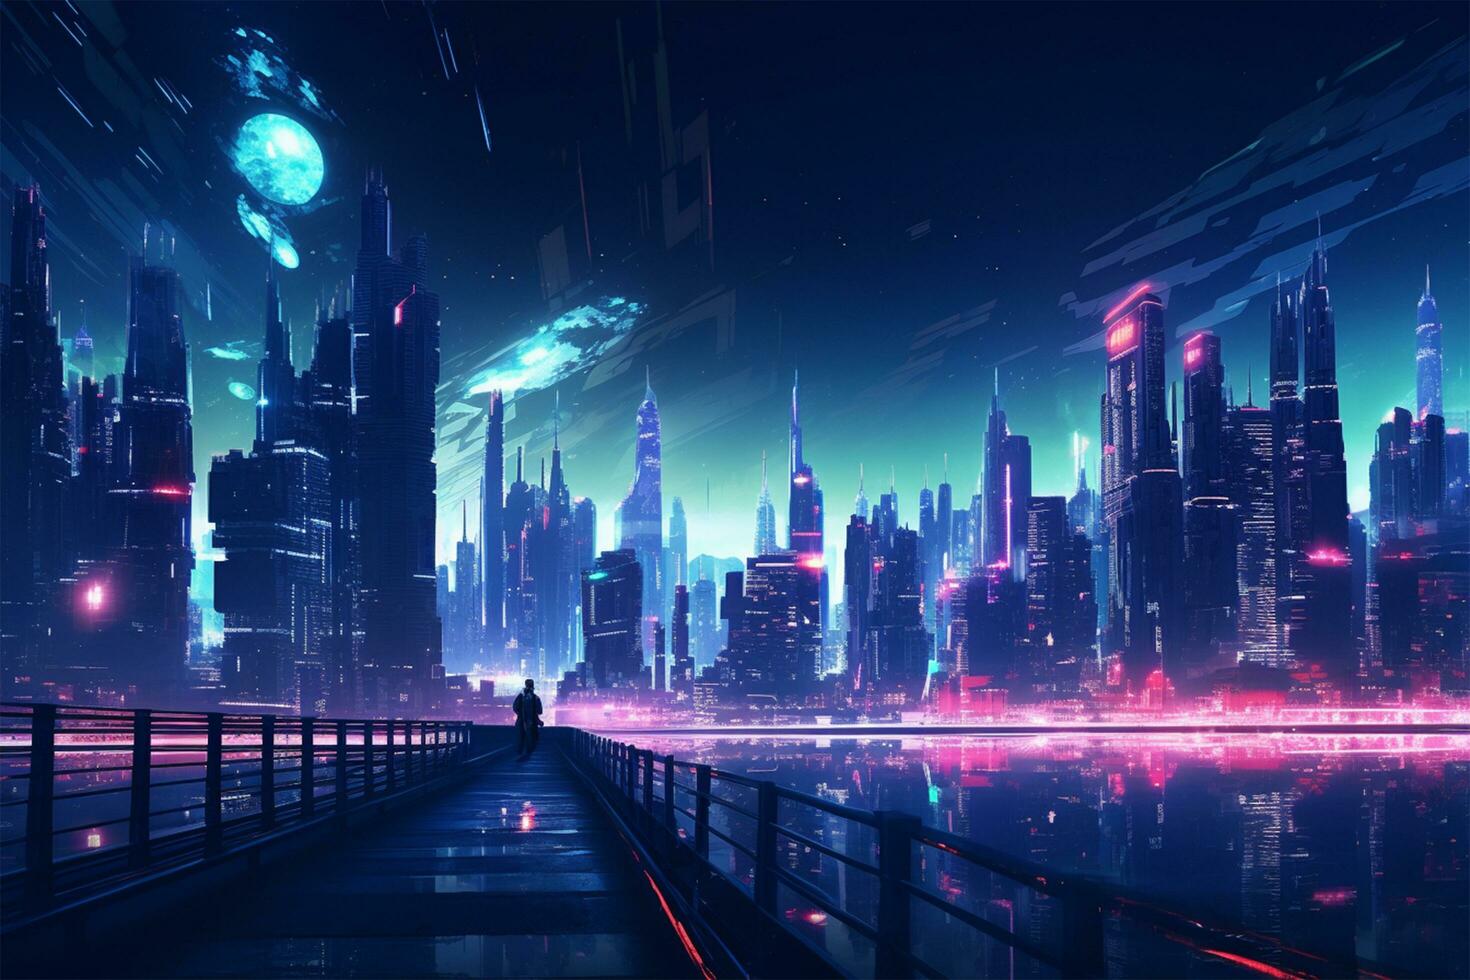 cyberpunk city illustration in the night view photo